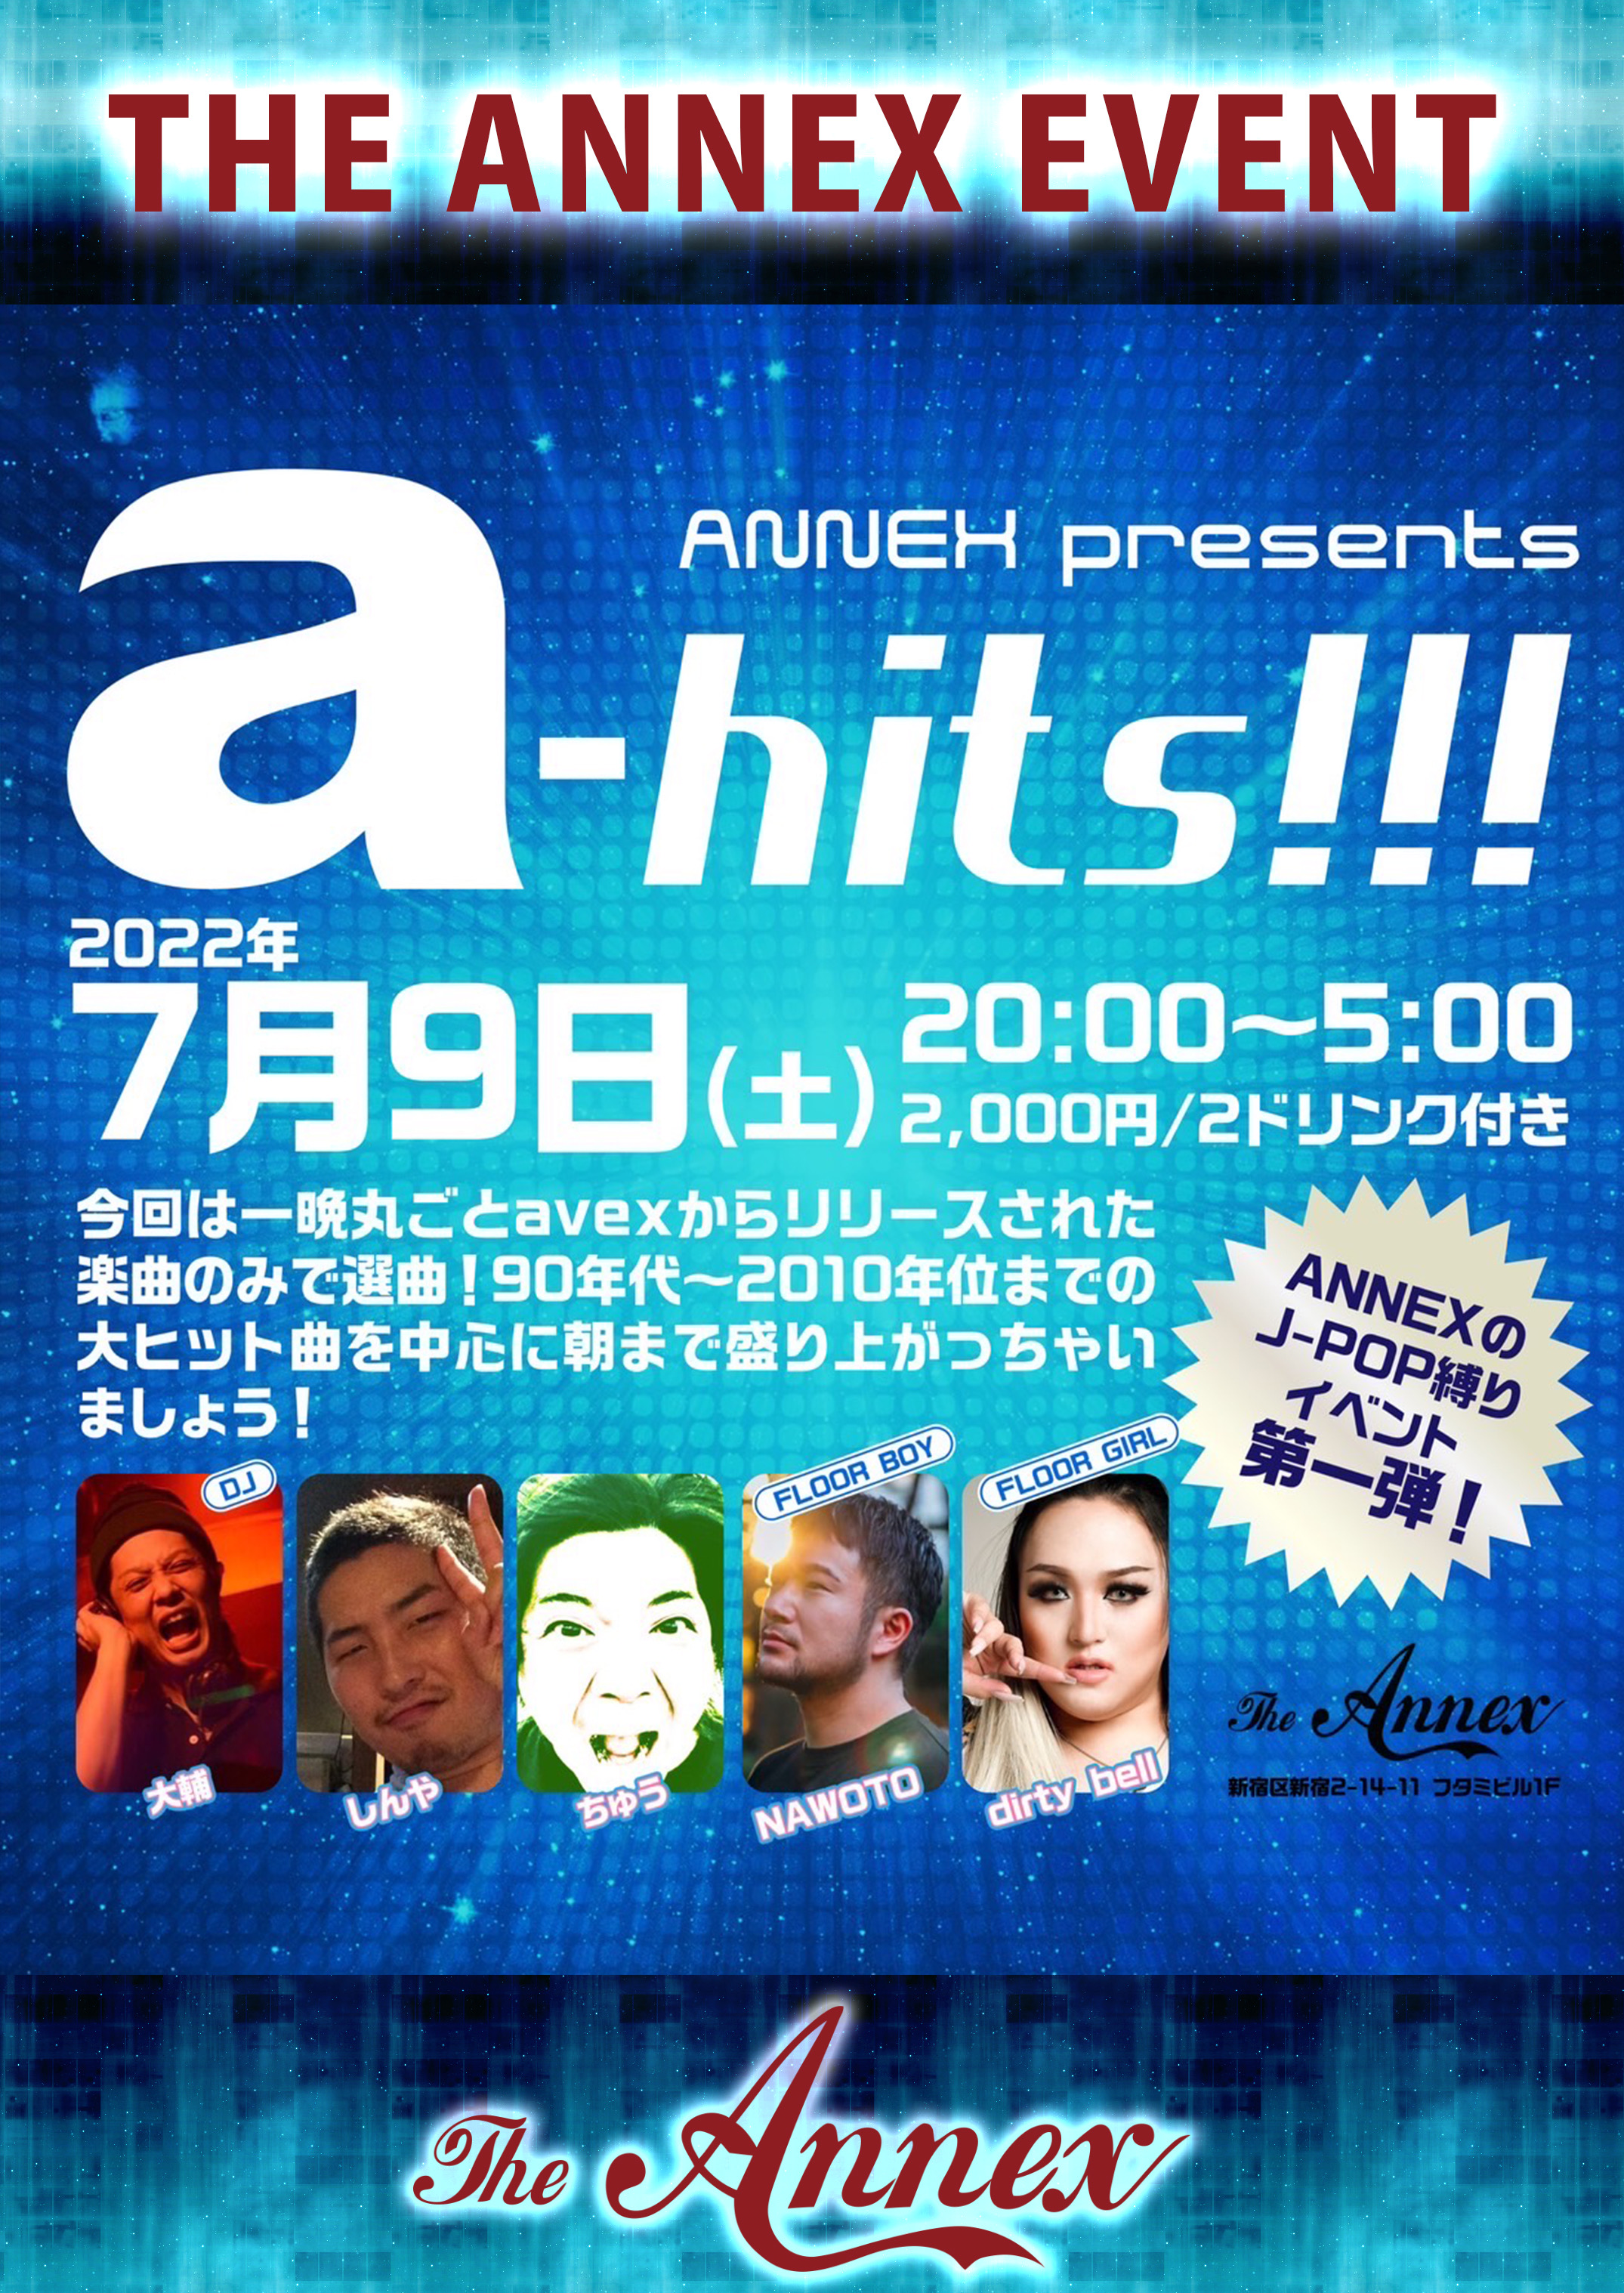 ANNEX presents "a-hits!!!"